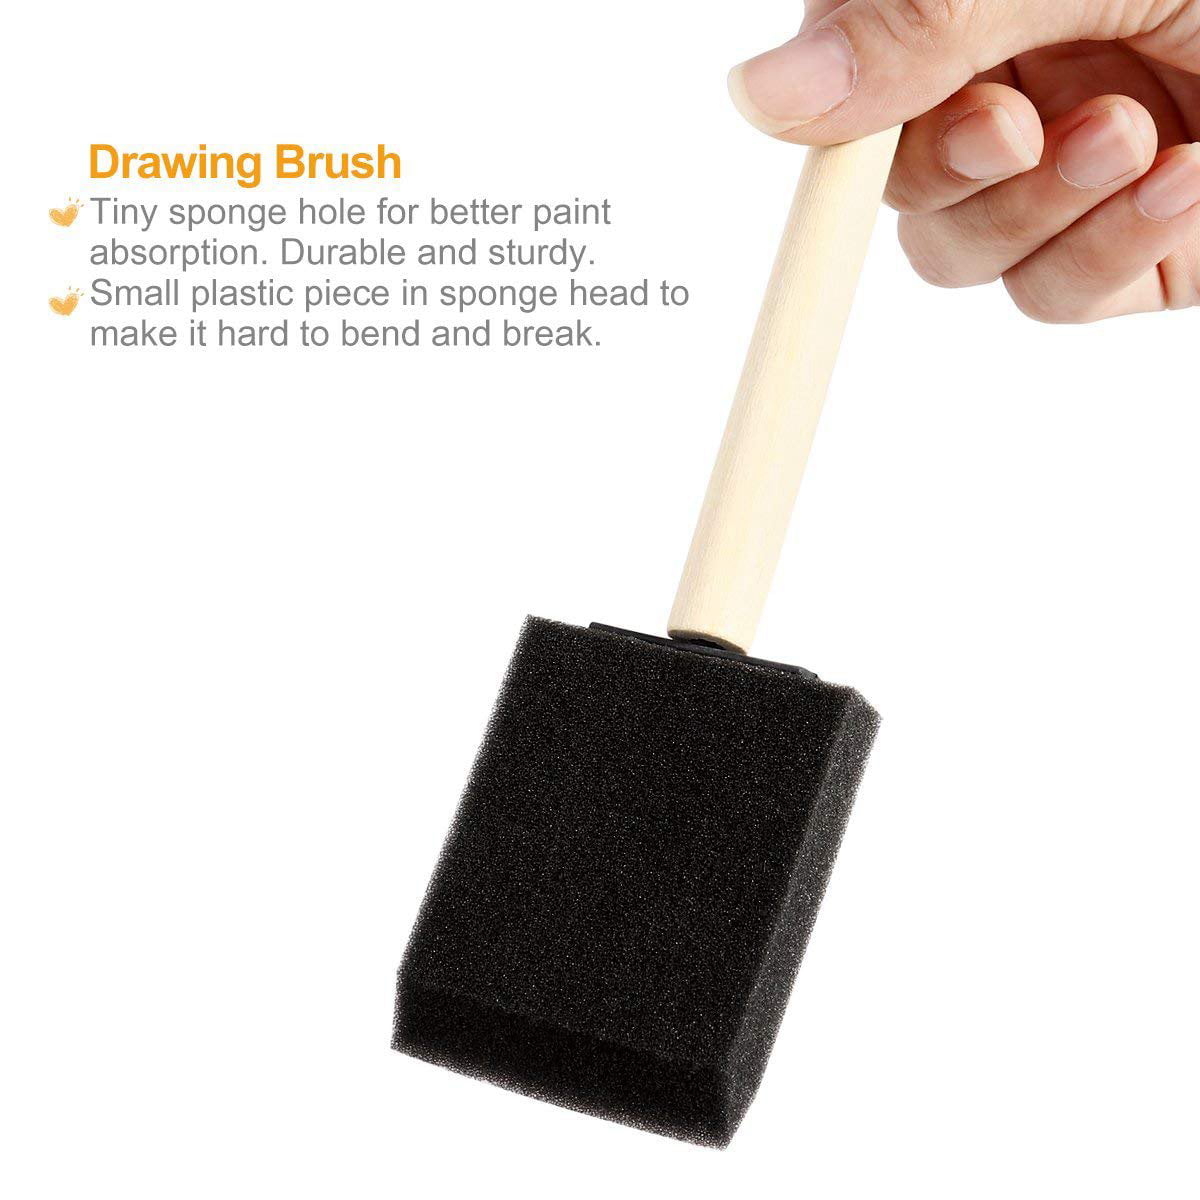 Nrpfell Foam Brush Painting Sponge Tool with Hardwood Handles Pack of 10 